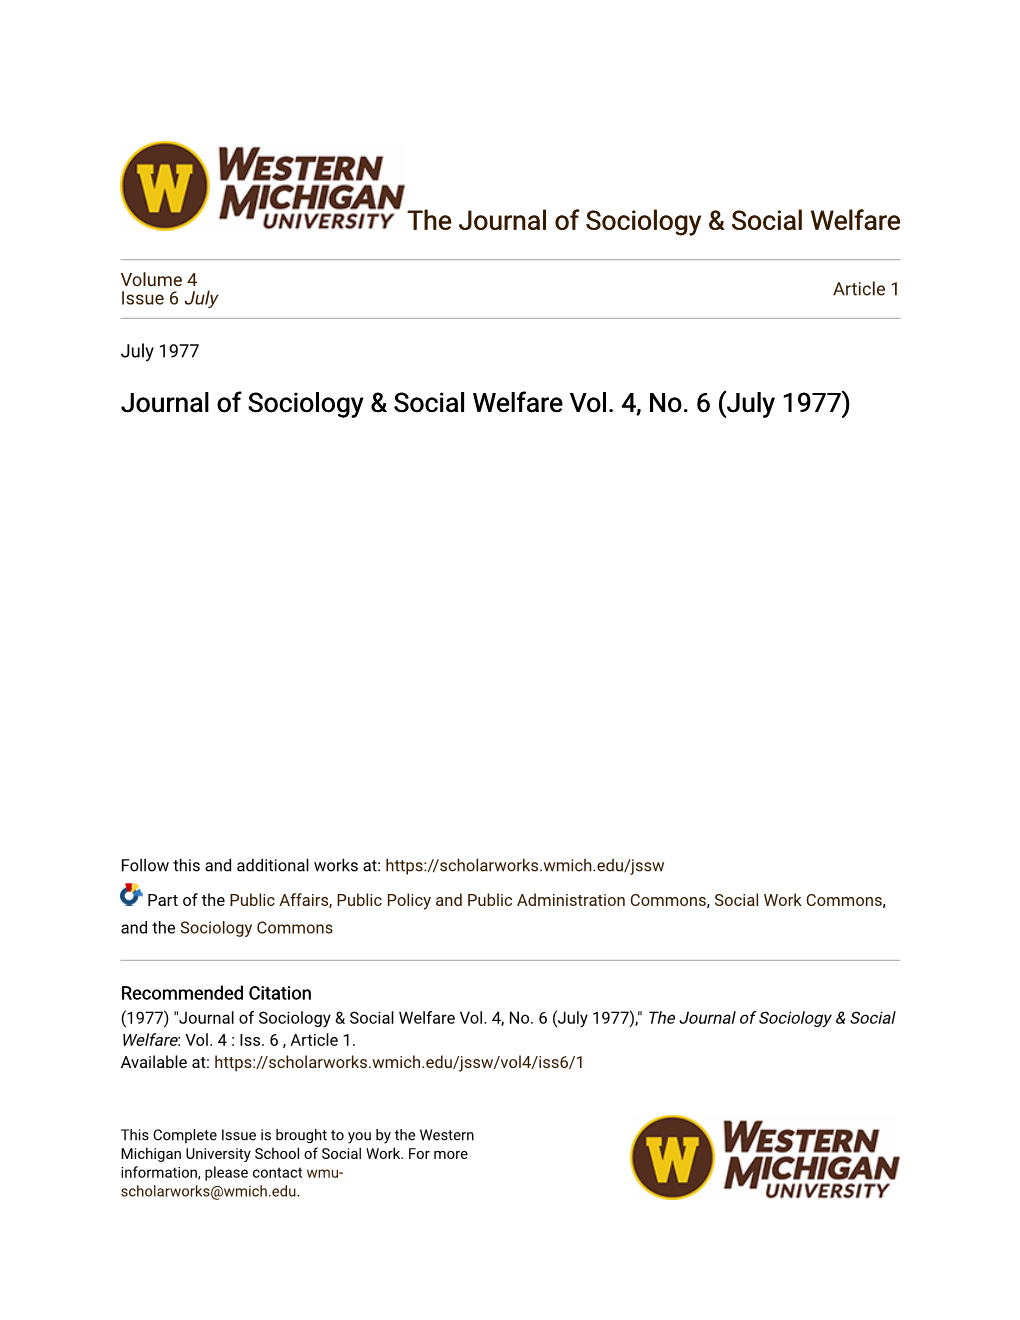 Journal of Sociology & Social Welfare Vol. 4, No. 6 (July 1977)